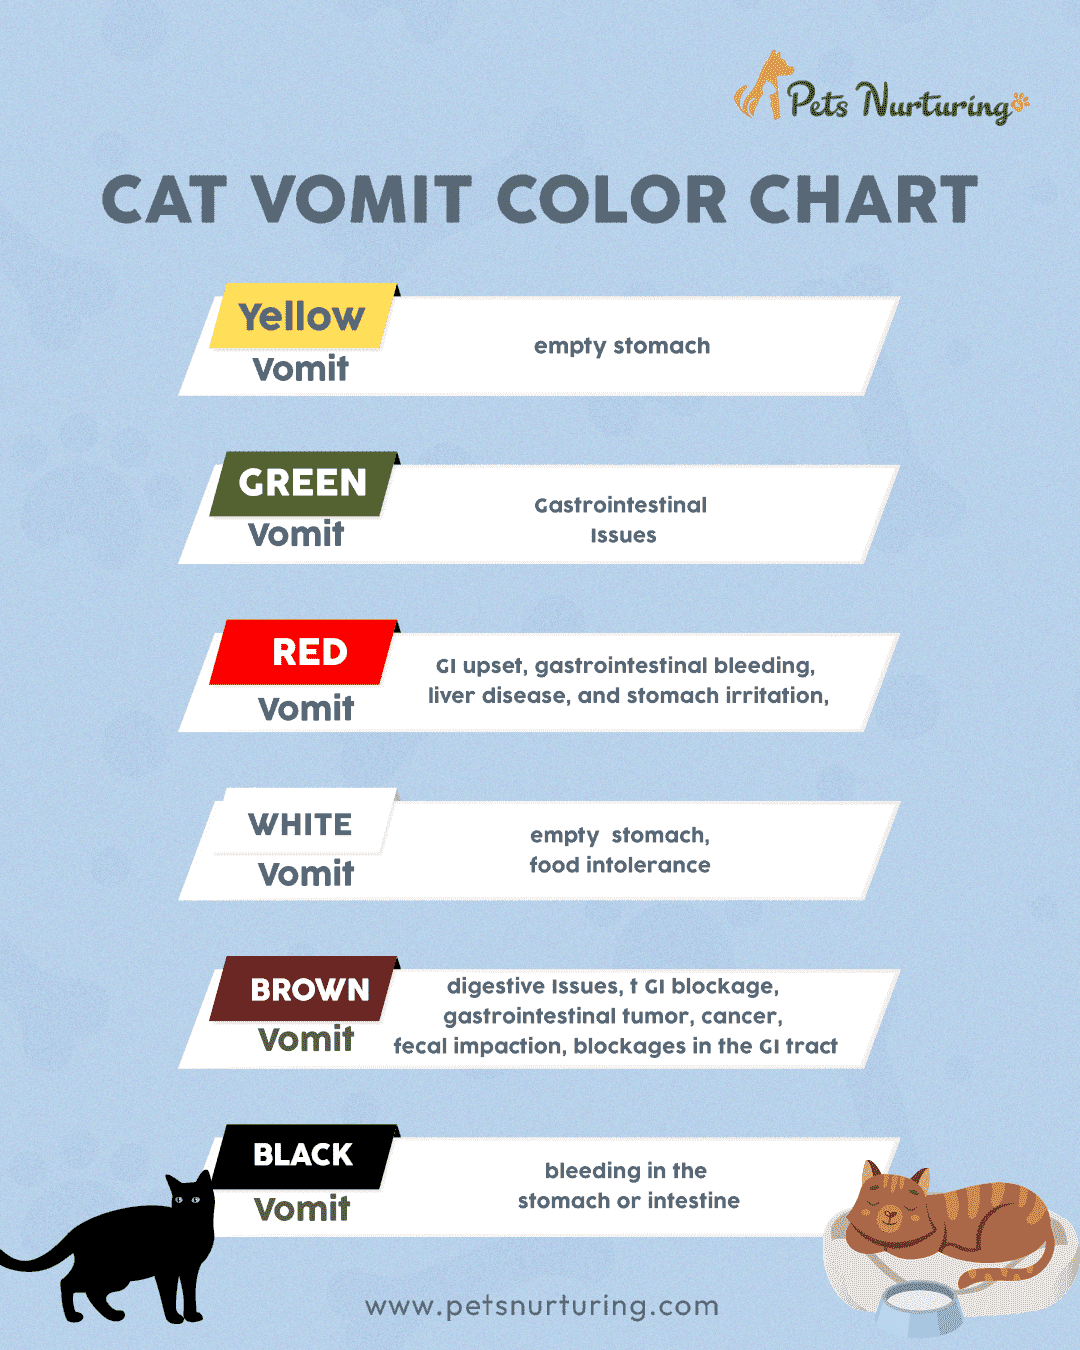 Cat Vomit Color Chart: What Does Each Vomit Color Mean?